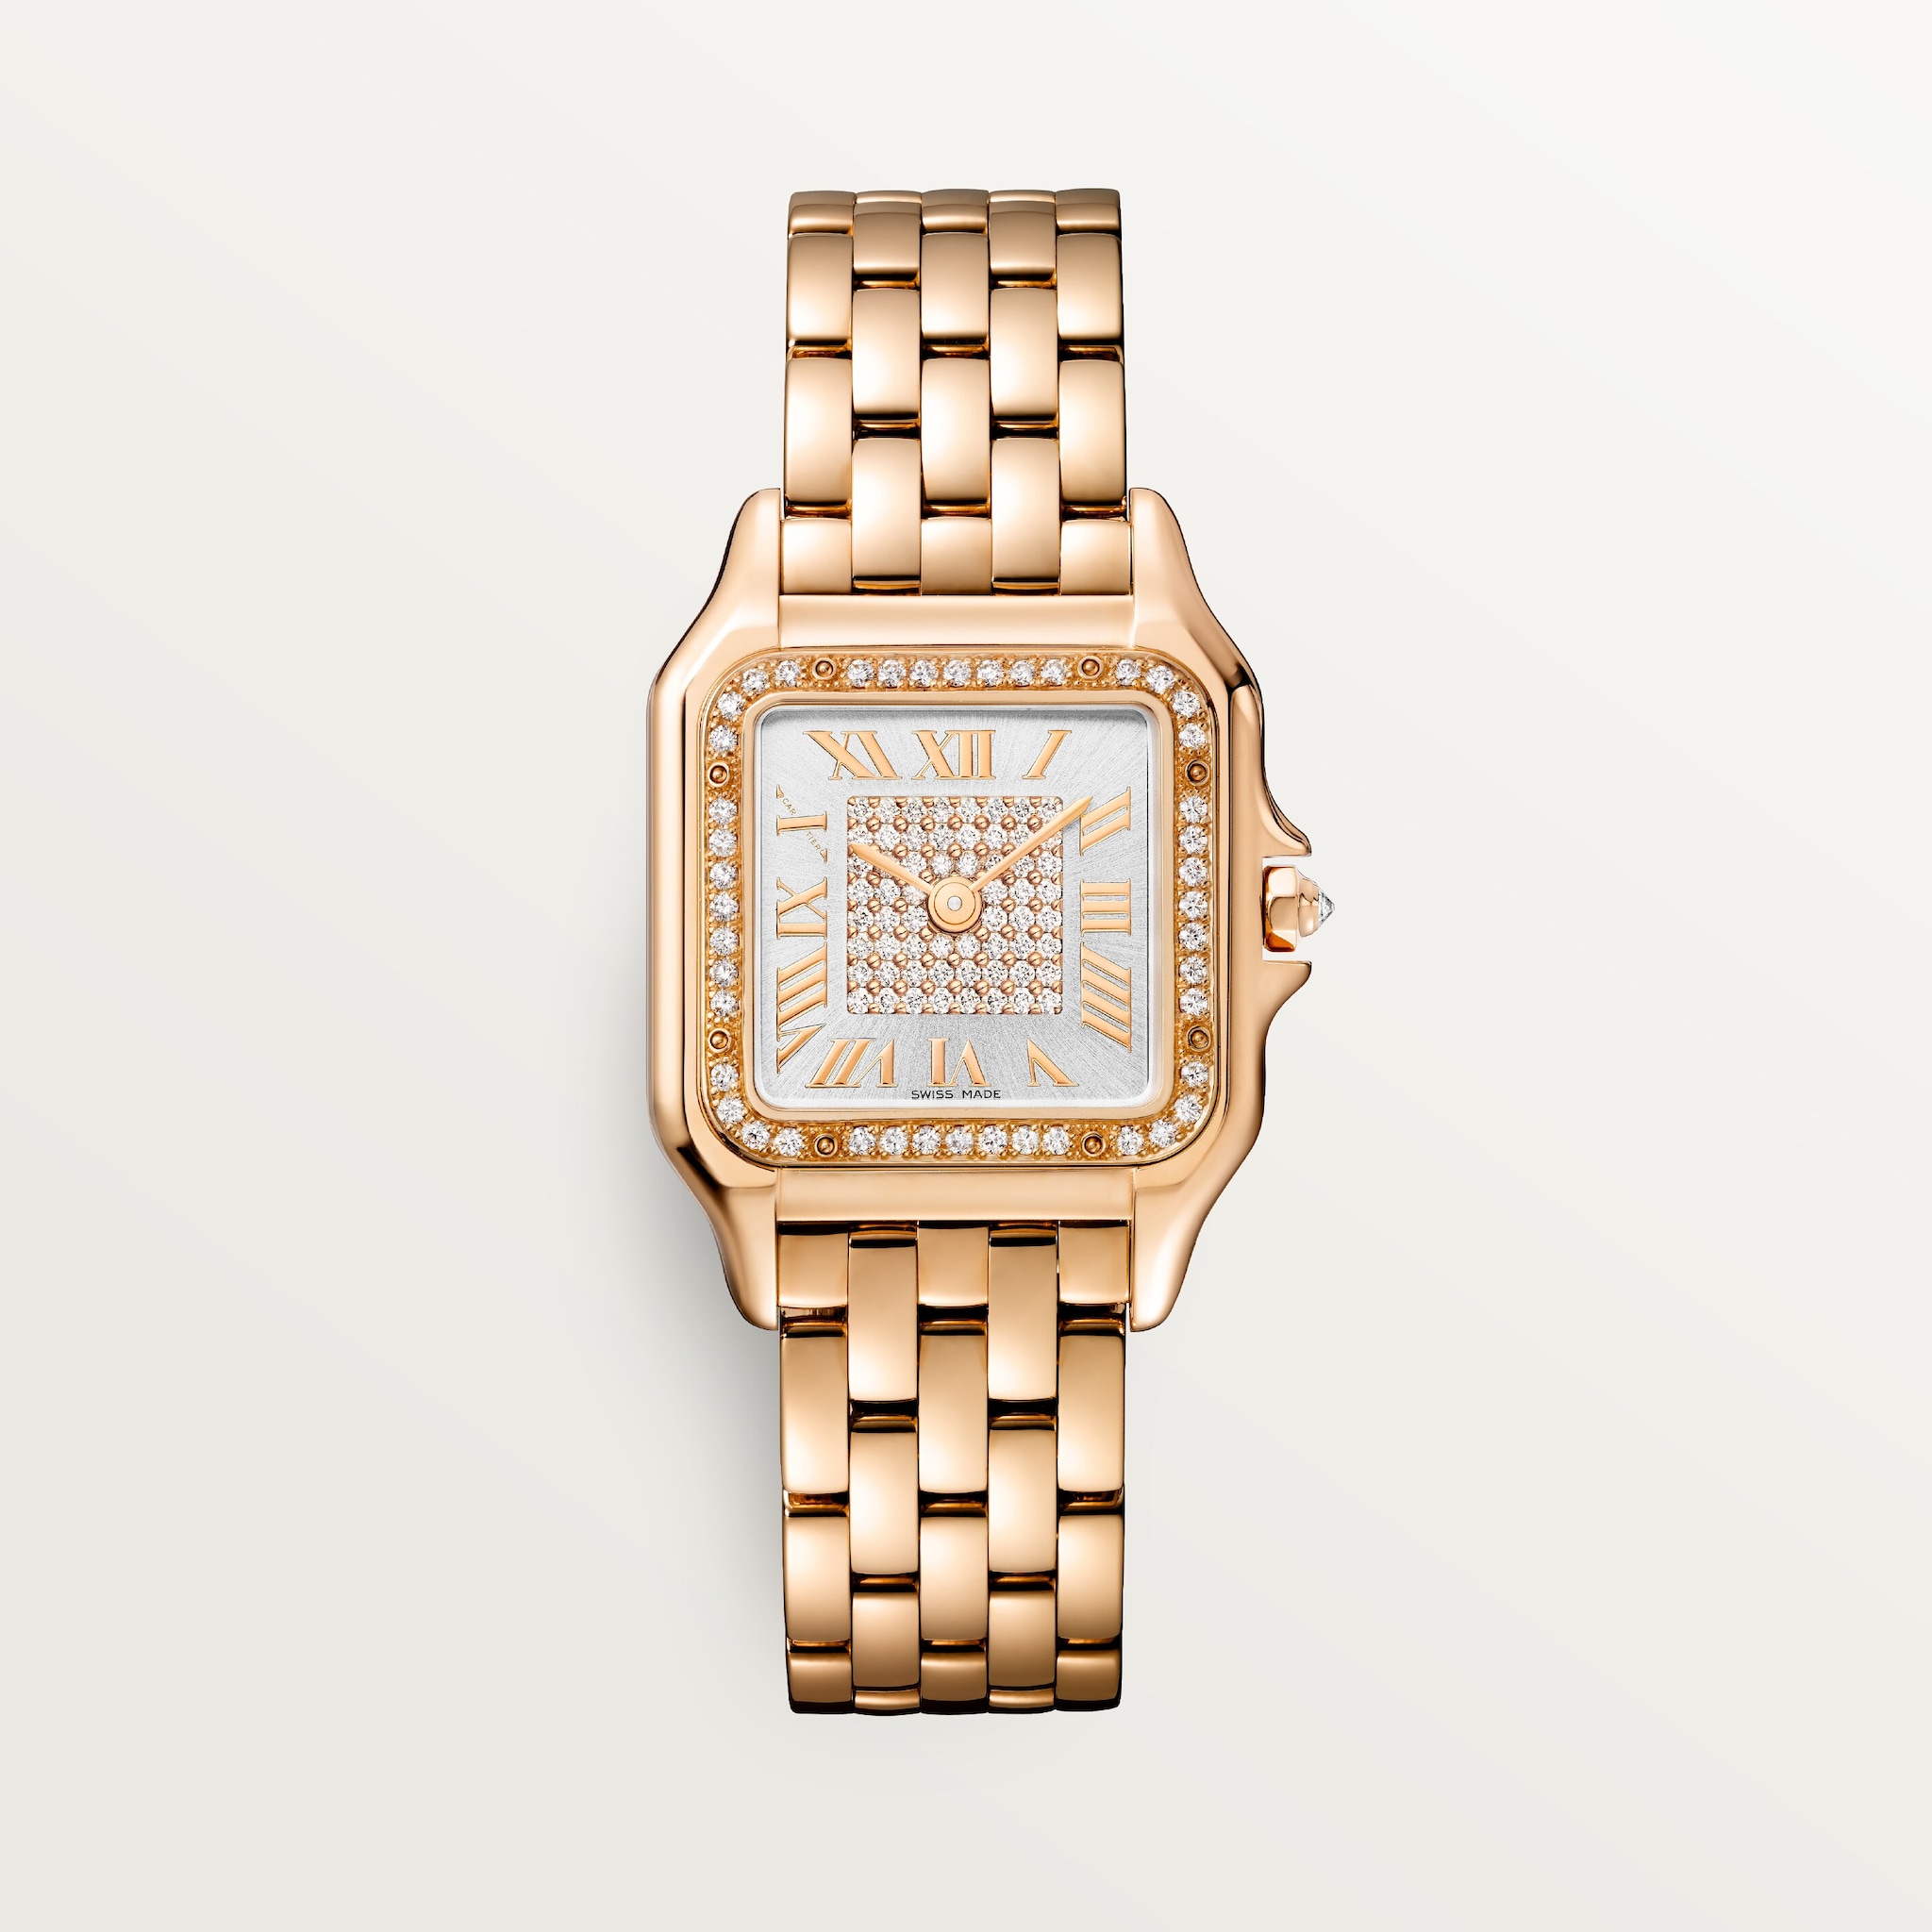 Reloj Panthère de CartierTamaño mediano, cuarzo, oro rosa, diamantes